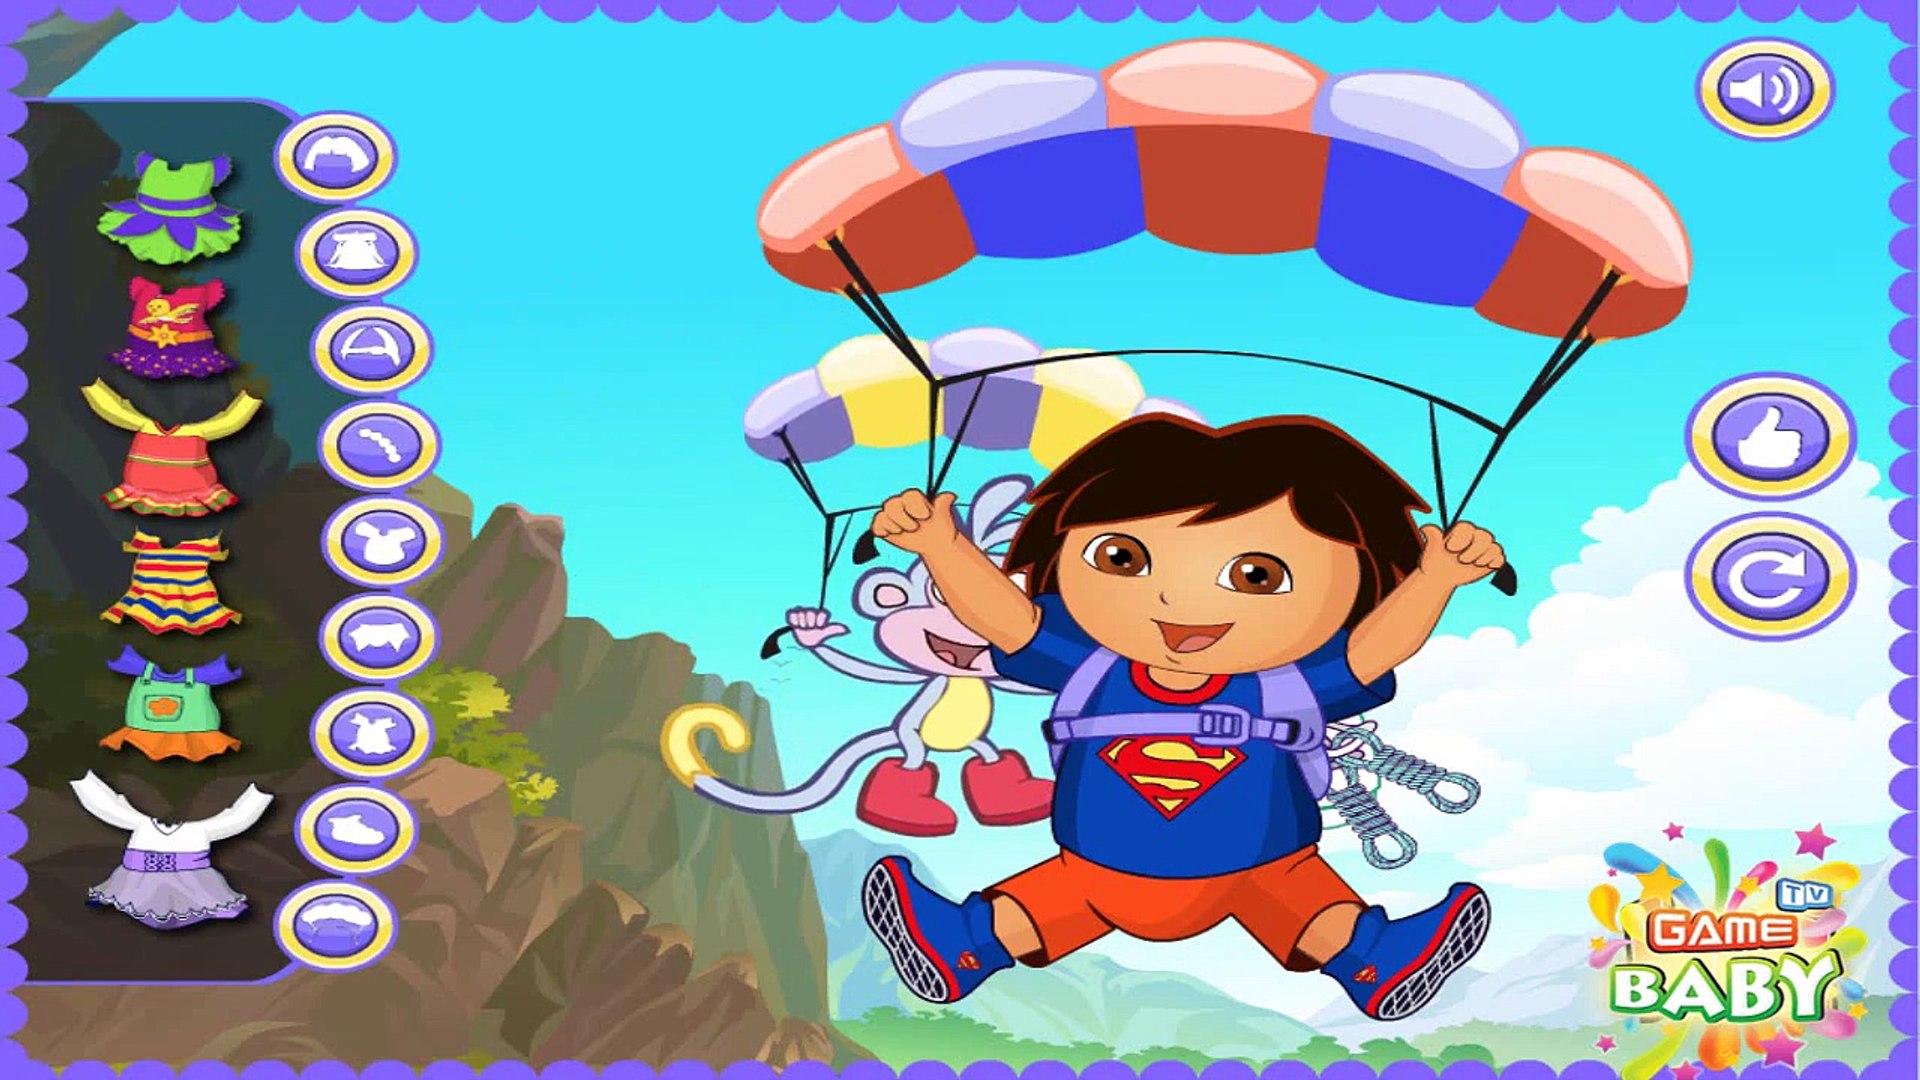 Game Baby Tv Episodes 49 - Dora The Explorer - Dora Parachuting Adventure Games